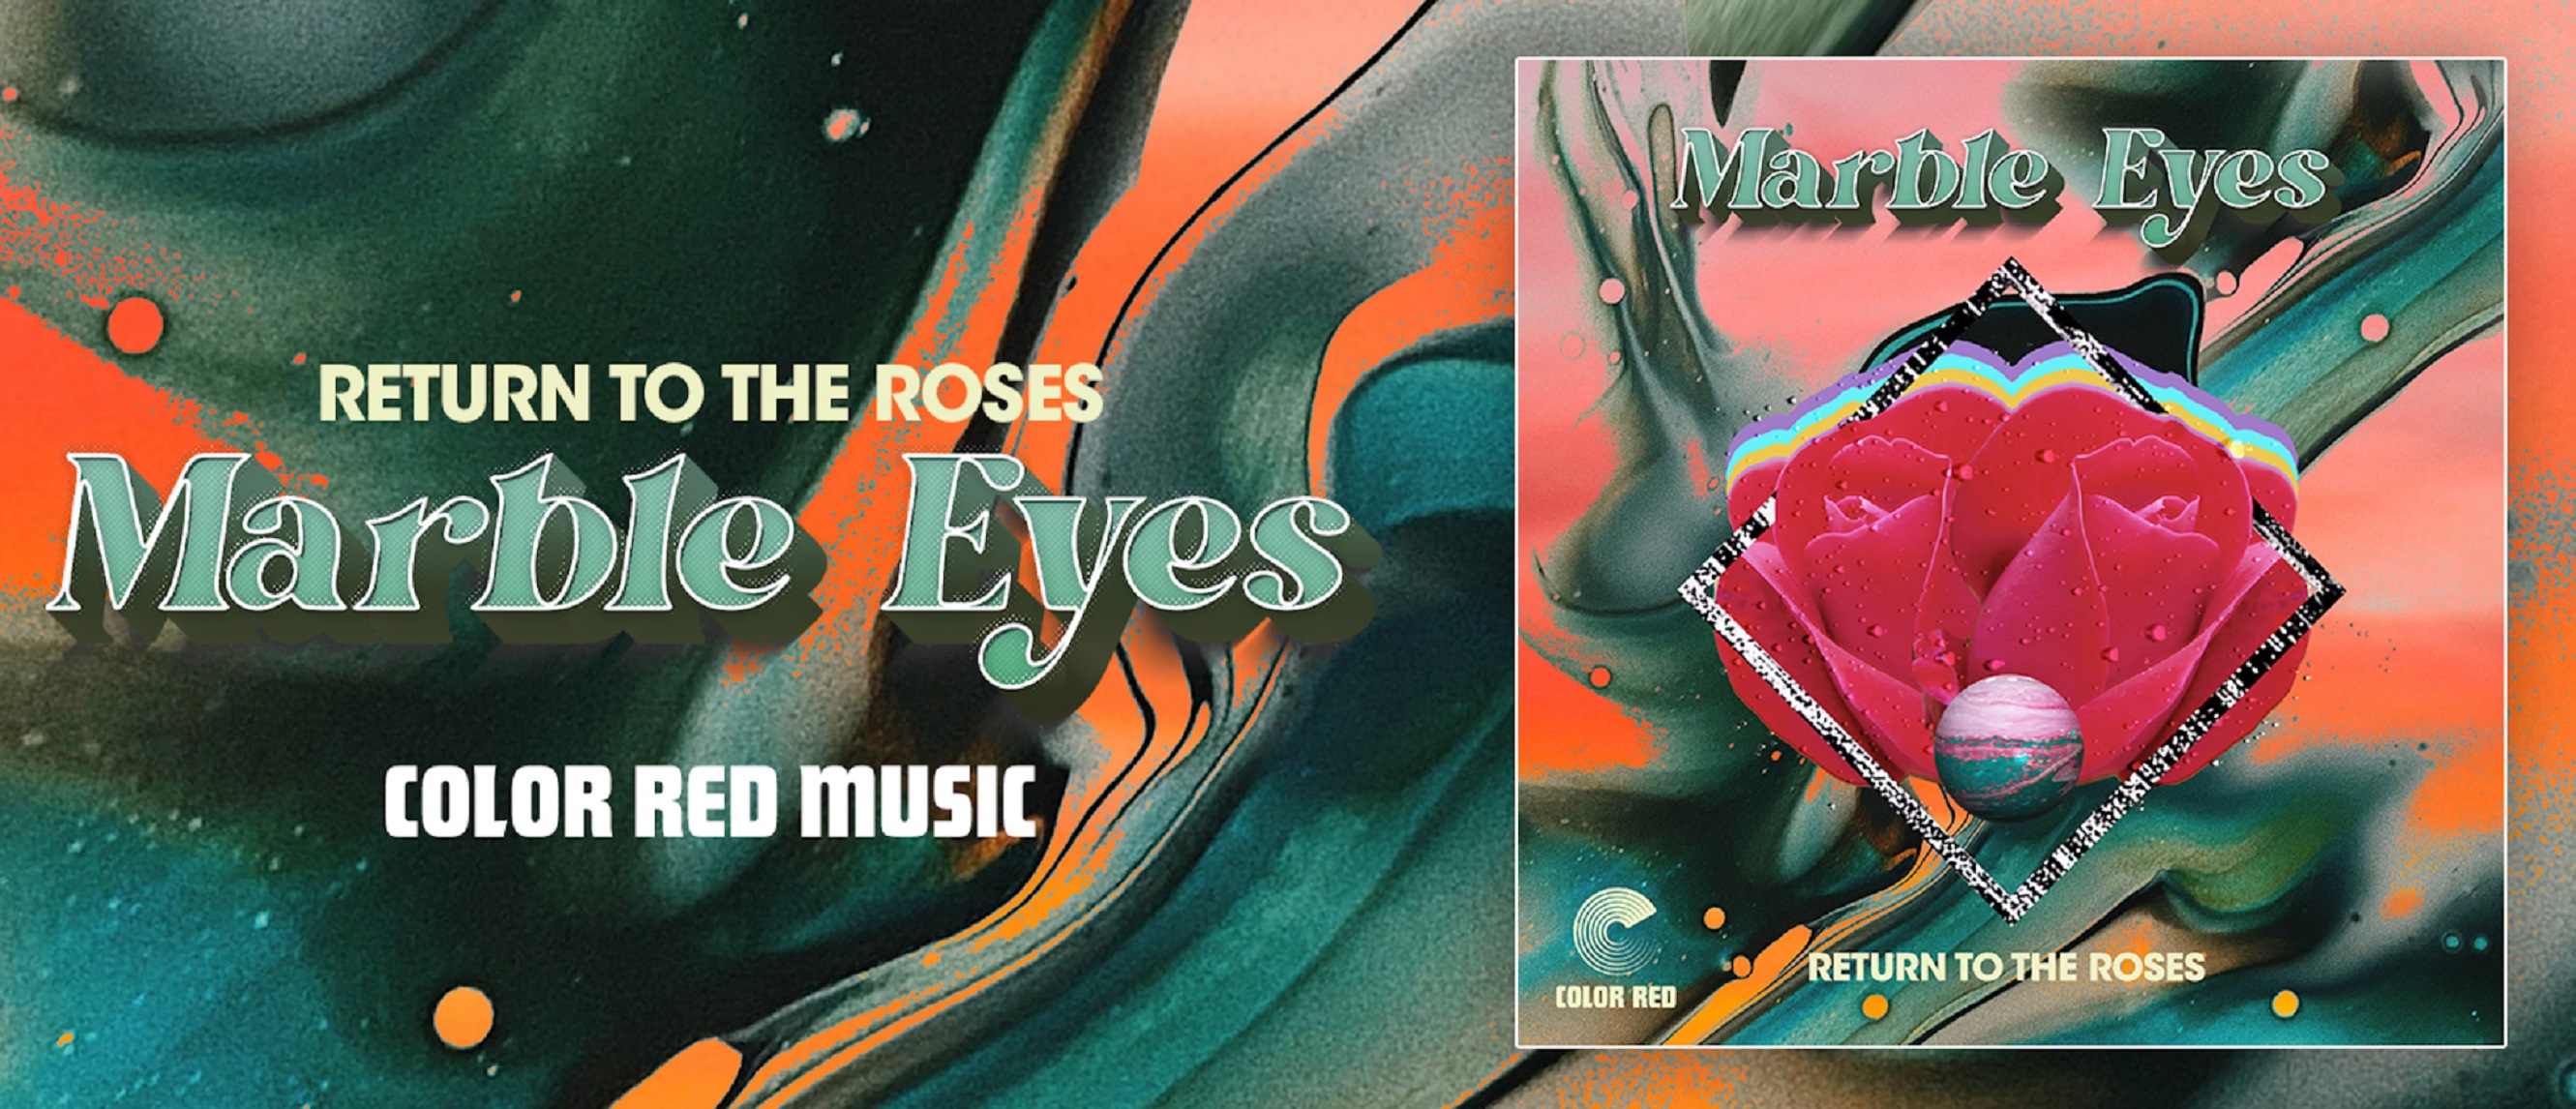 Marble Eyes Debut Album “Return to the Roses”